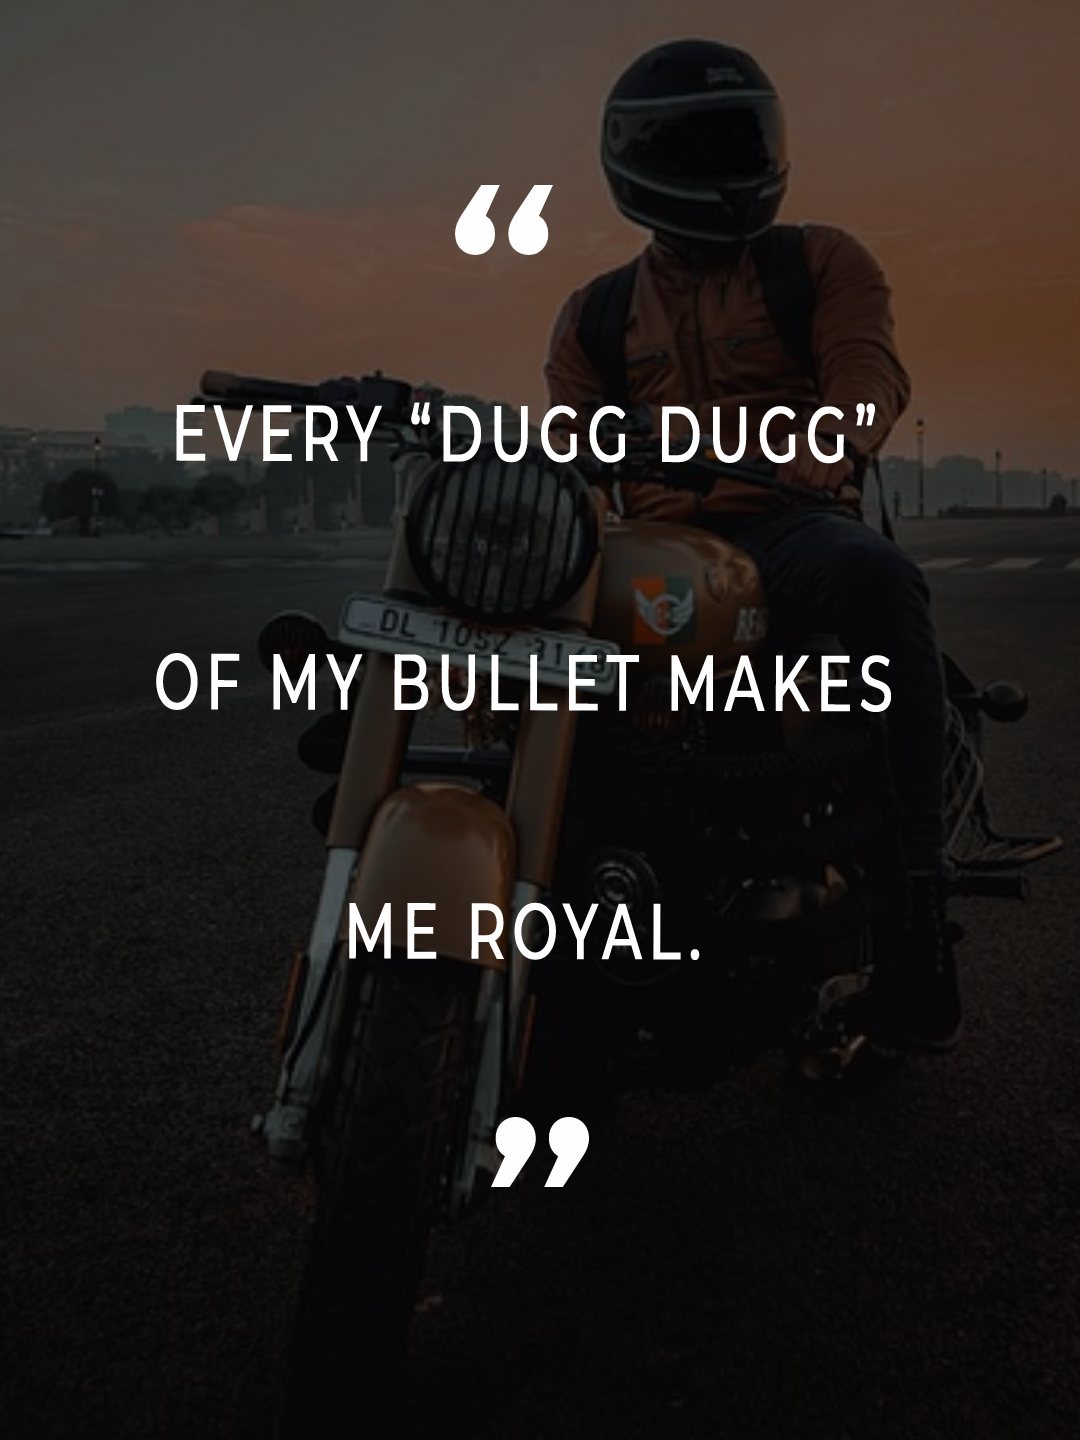 Every “Dugg Dugg” of my Bullet makes me Royal.